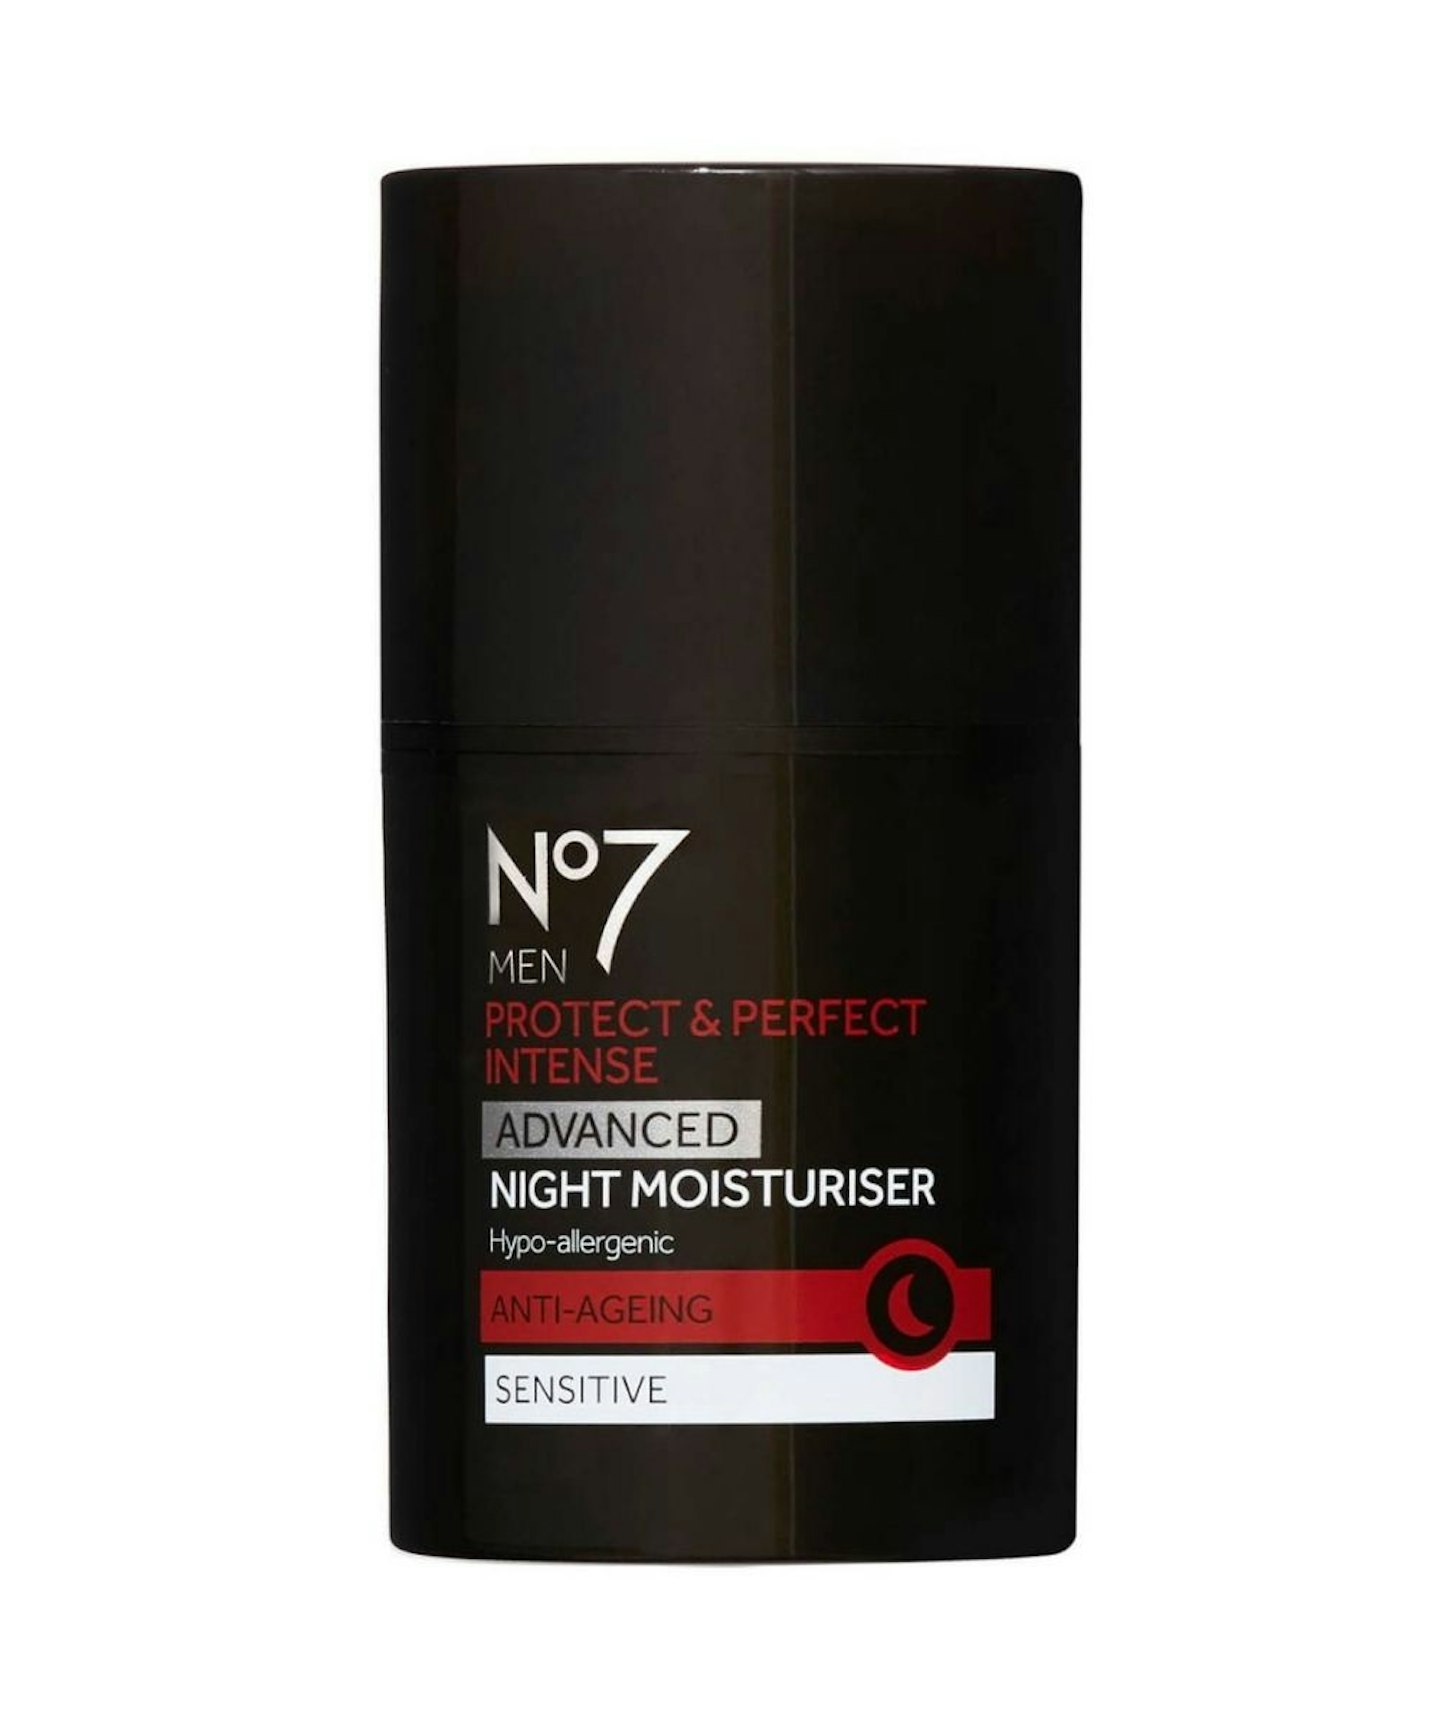 No7 Men Protect & Perfect Intense ADVANCED Night Moisturiser